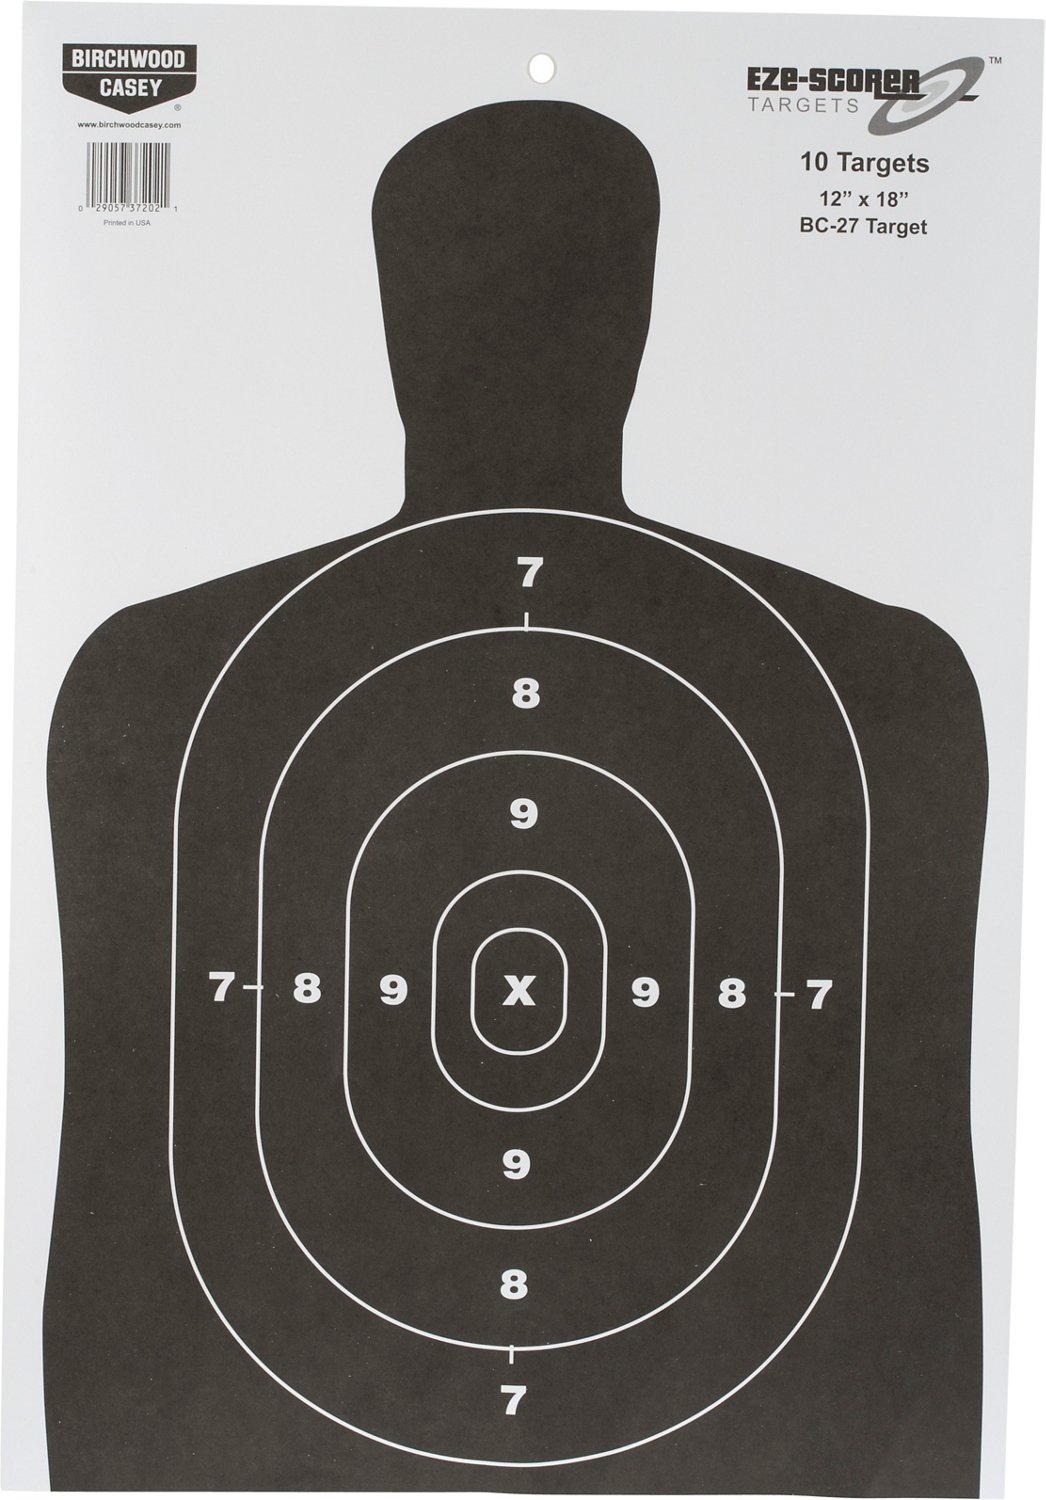 Shooting Targets | Steel Targets & Paper Targets | Academy